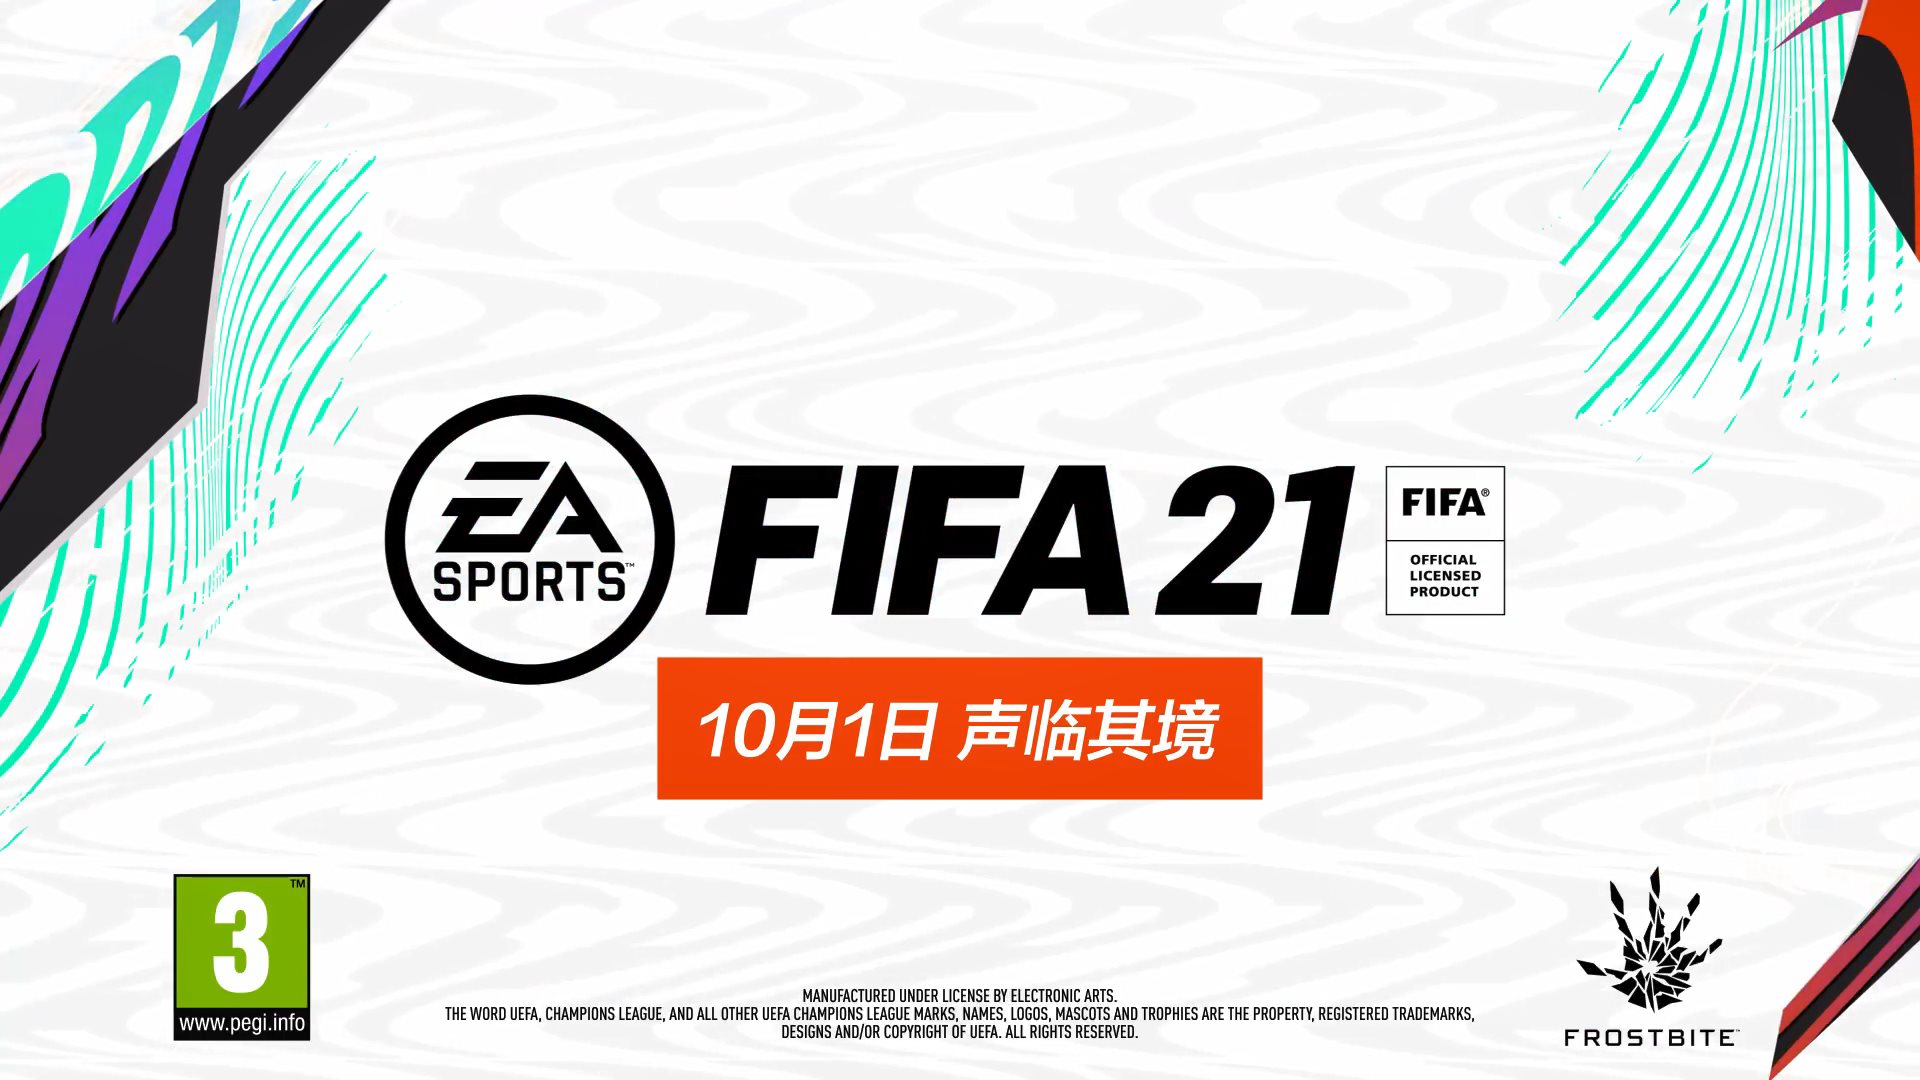 《FIFA 21》确认加入中文解说评述 首段预告释出